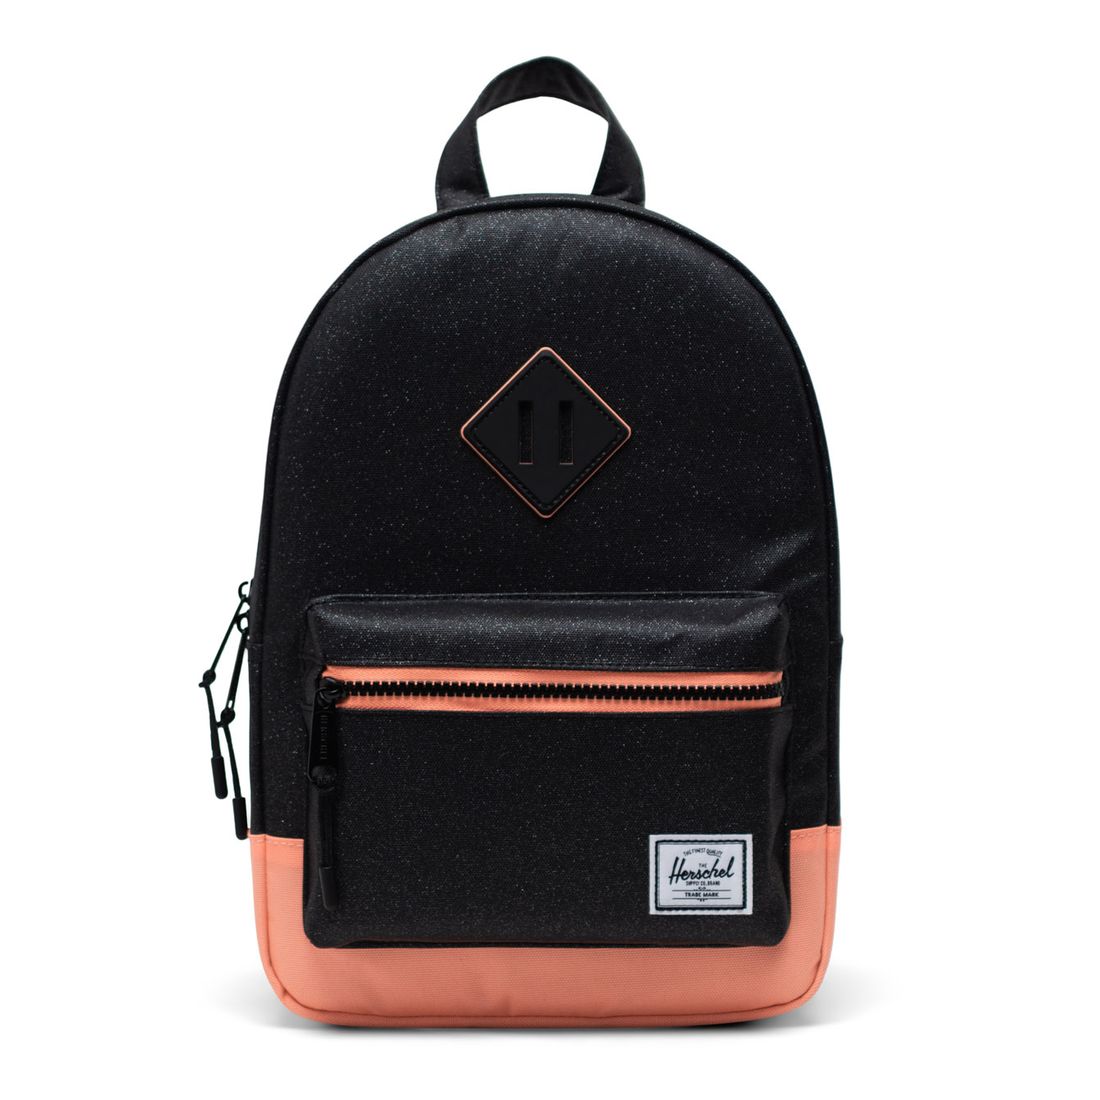 Herschel Heritage Kids Backpack Black Sparkle/Neon Peach